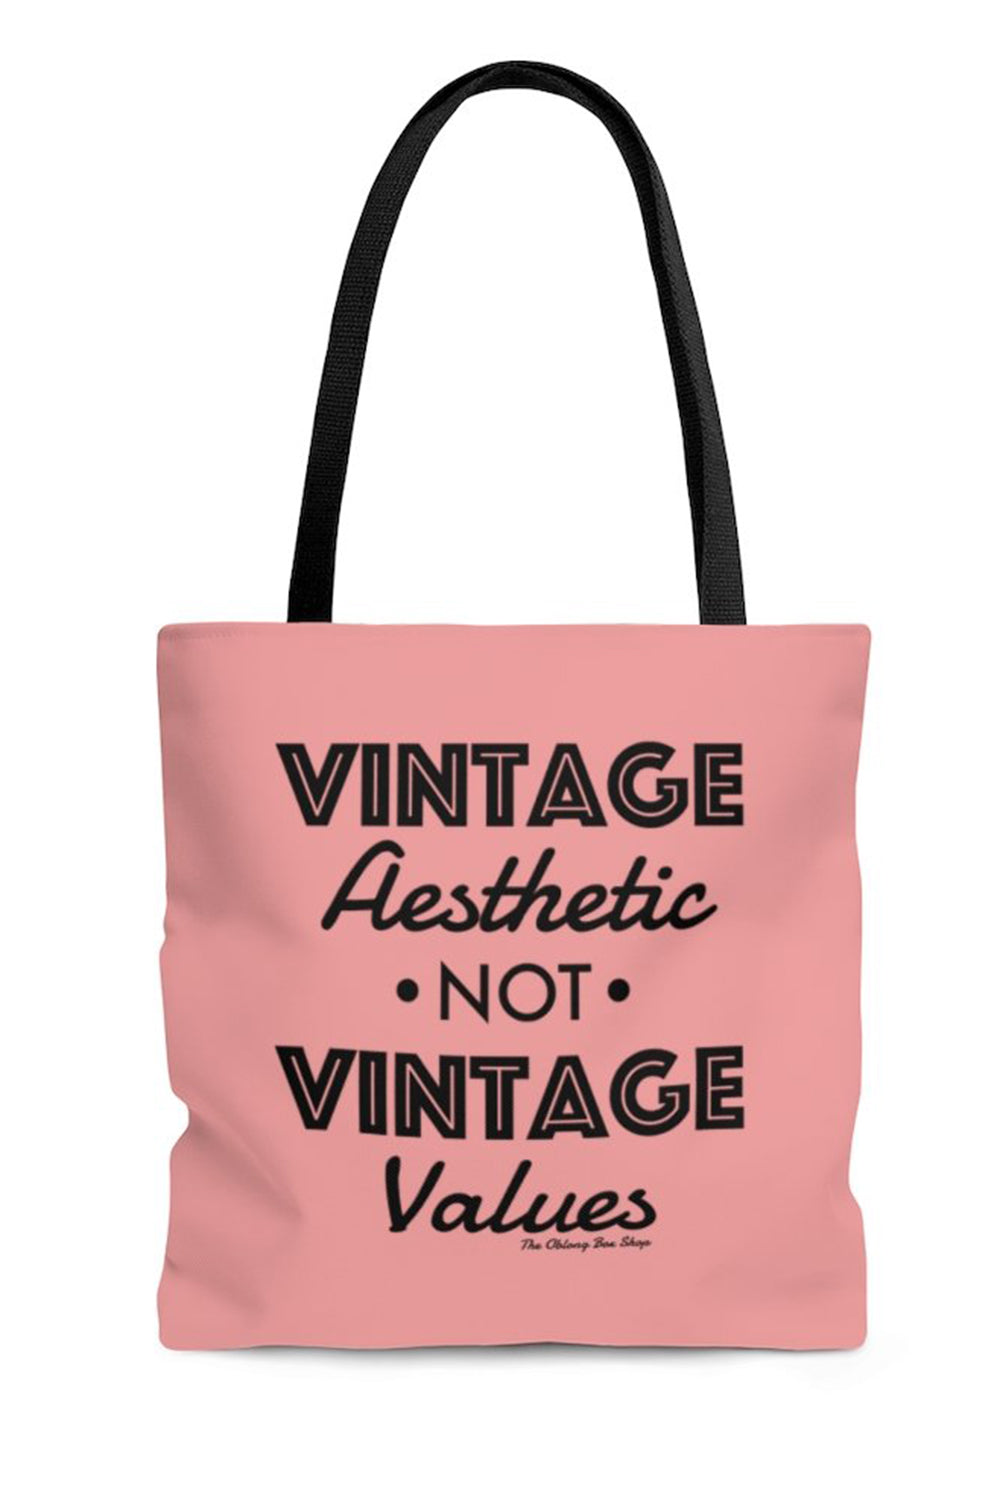 Vintage Aesthetic NOT Vintage Values Tote Bag